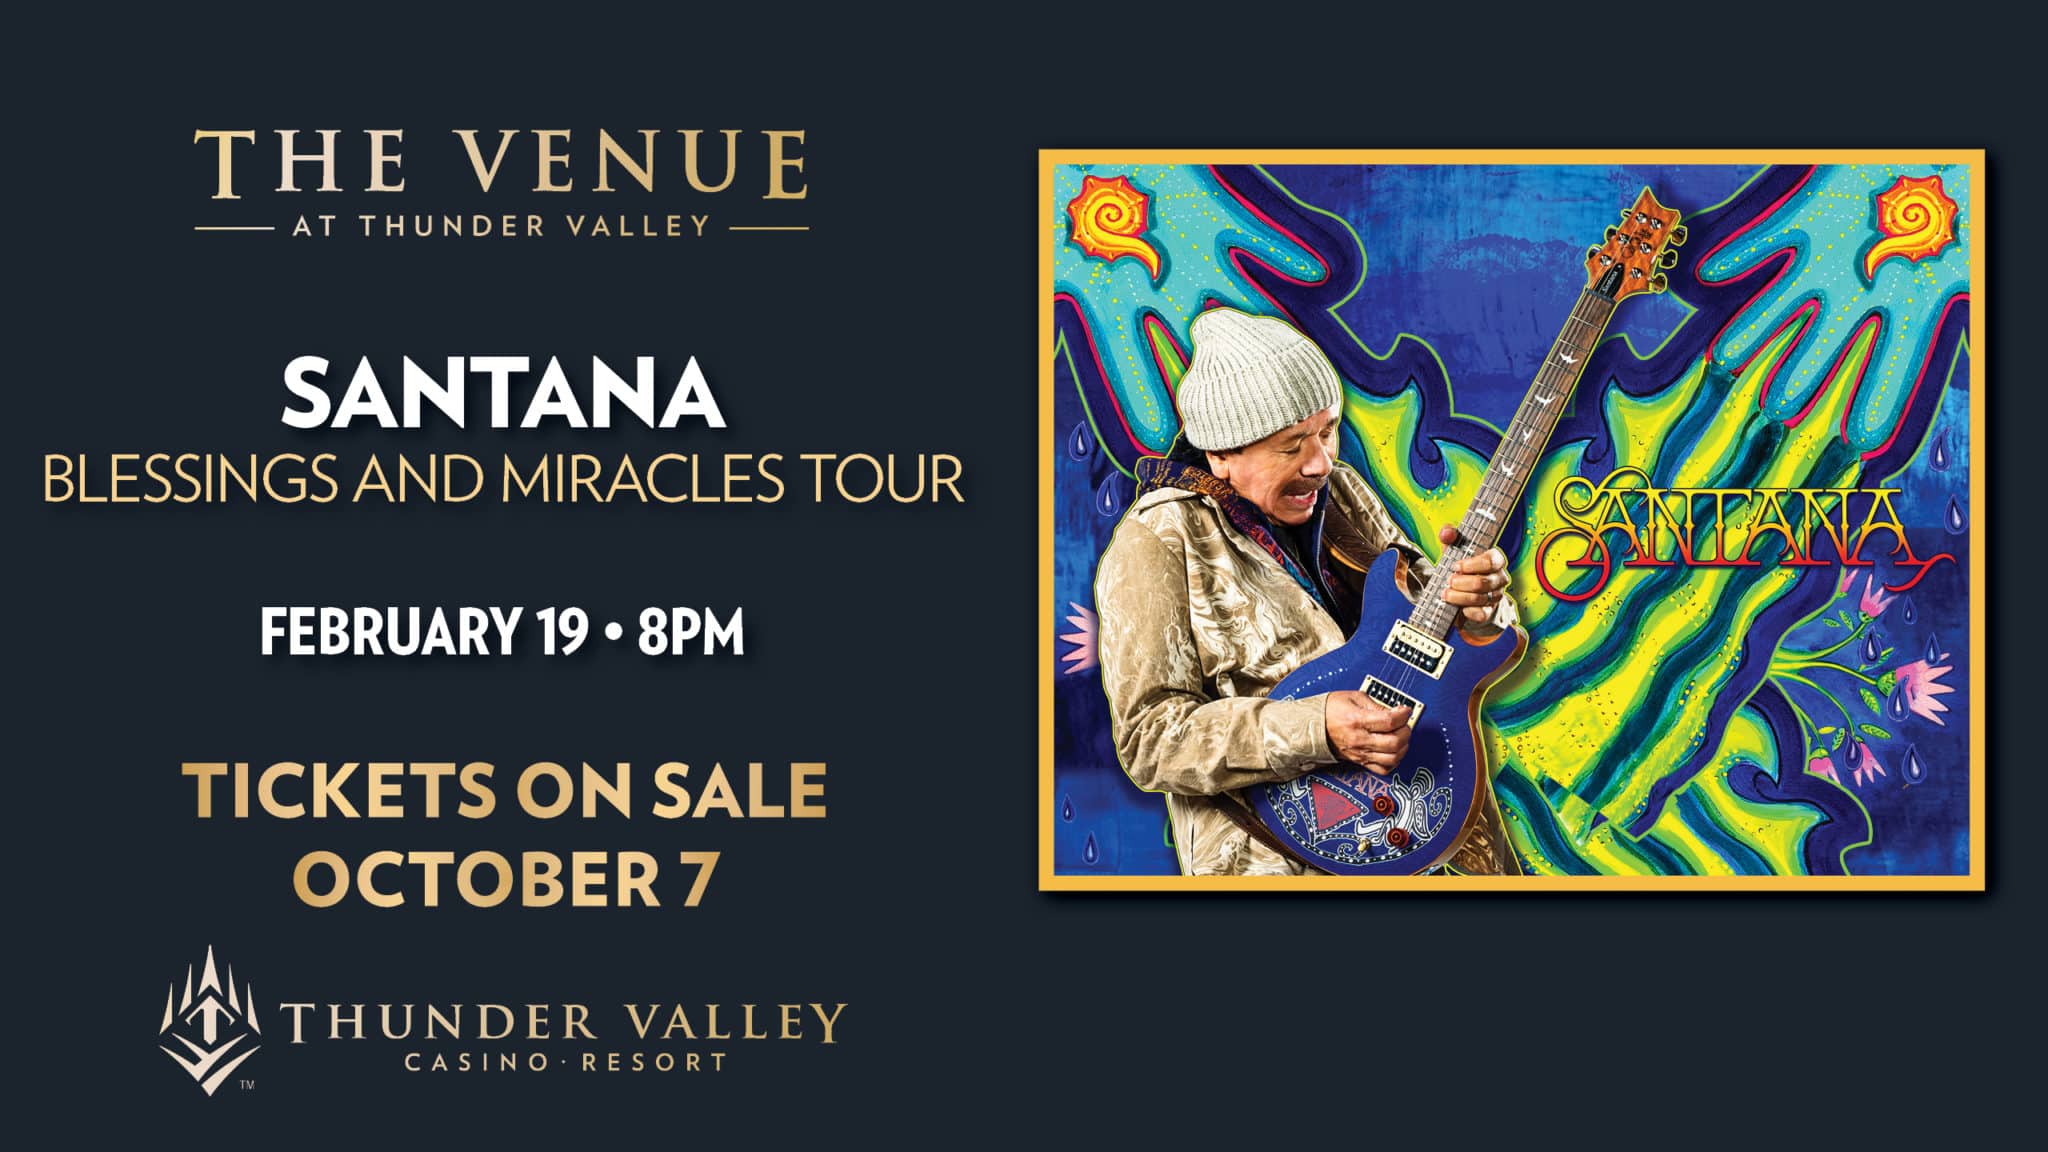 Santana The official website of Carlos Santana, featuring tour dates